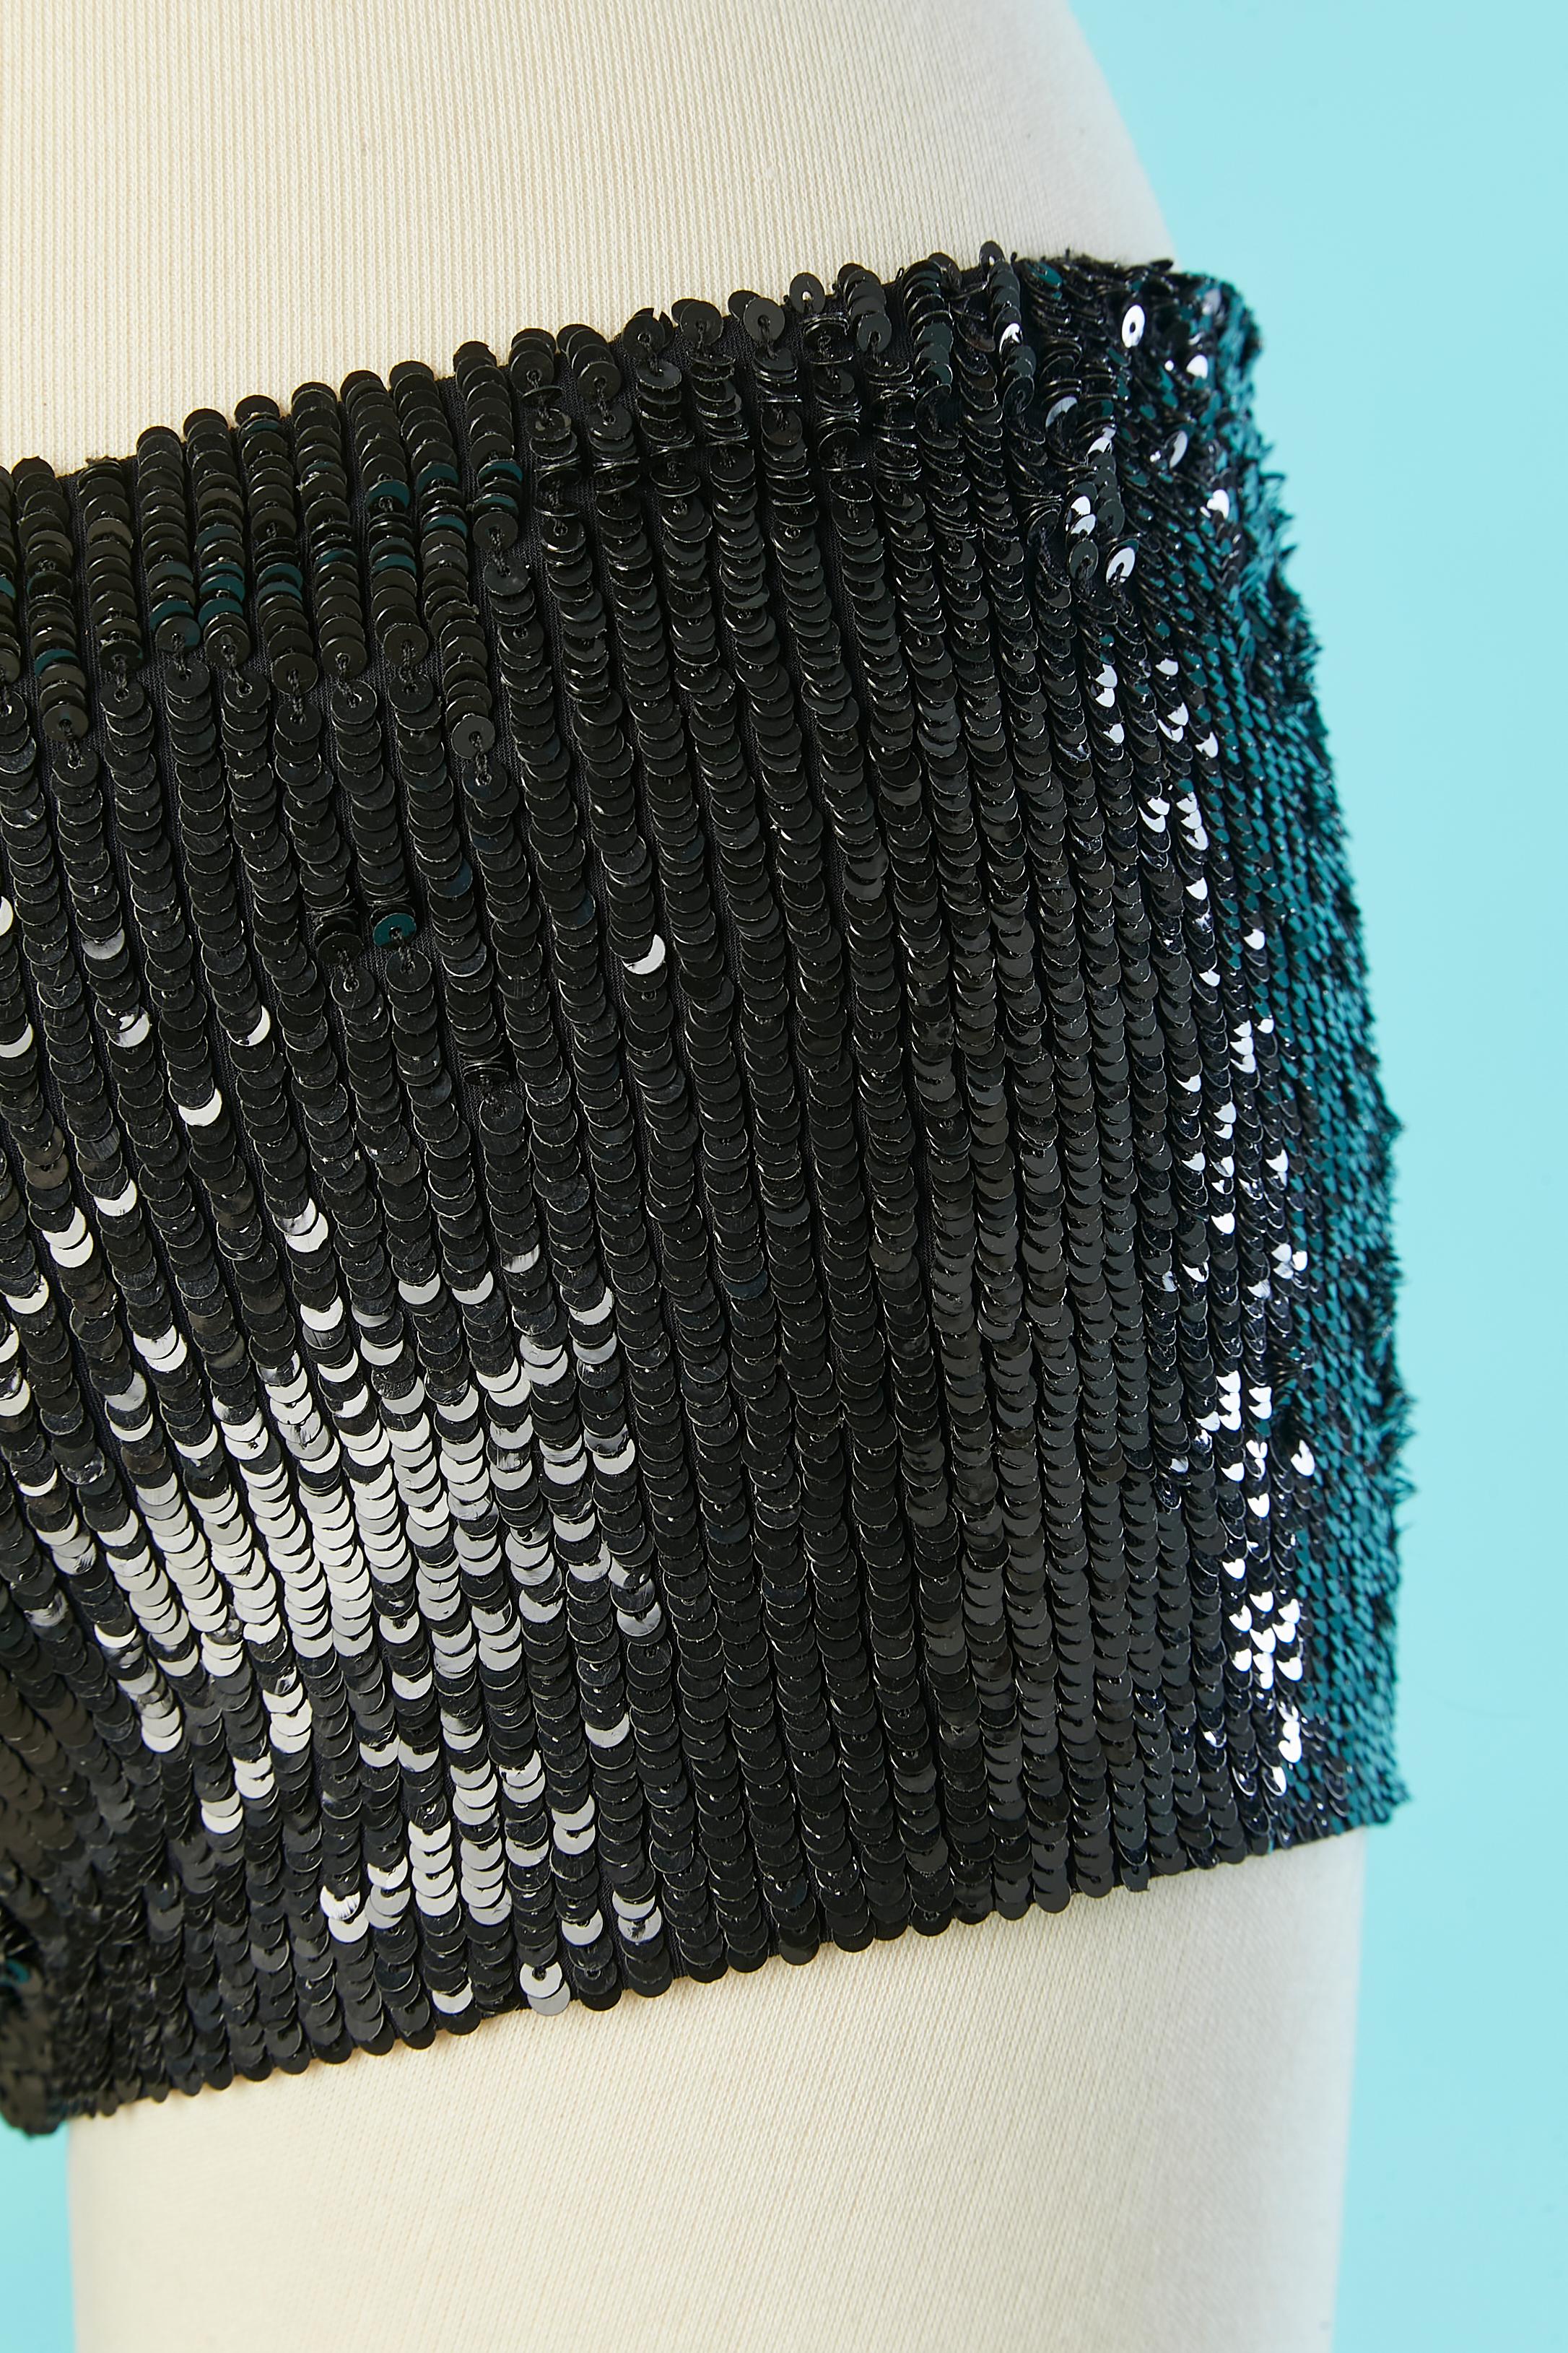 Micro short in black sequin. Main fabric composition : 72% polyamide 28% elasthane. Lining: 82% polyamide, 18% elasthane. 
SIZE XS 